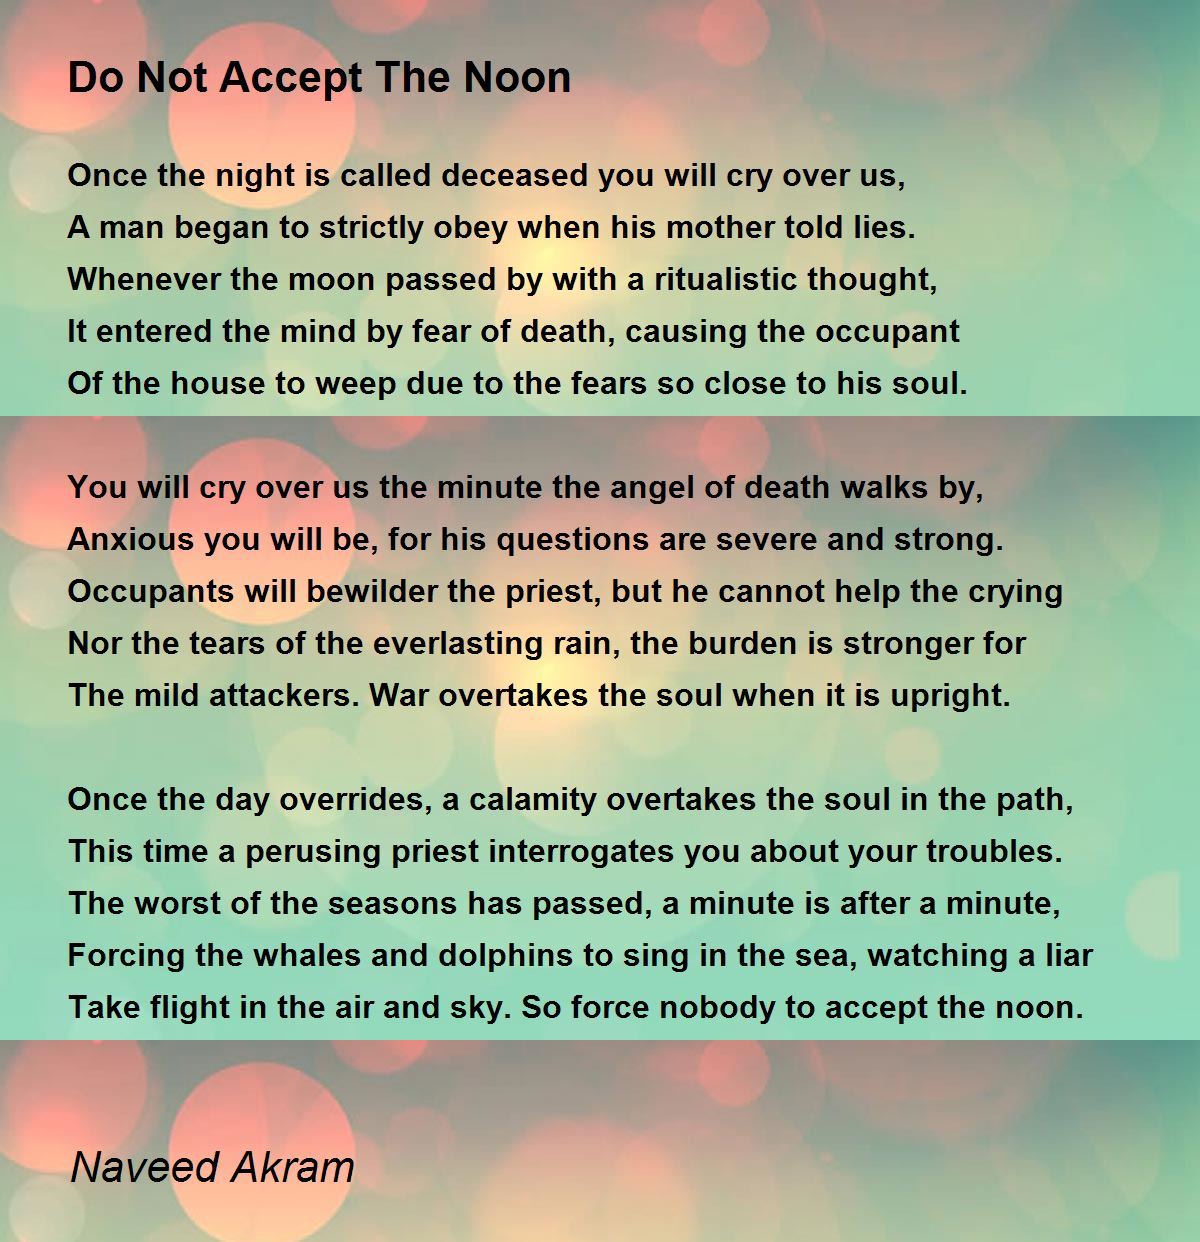 Do Not Accept The Noon - Do Not Accept The Noon Poem by Naveed Akram